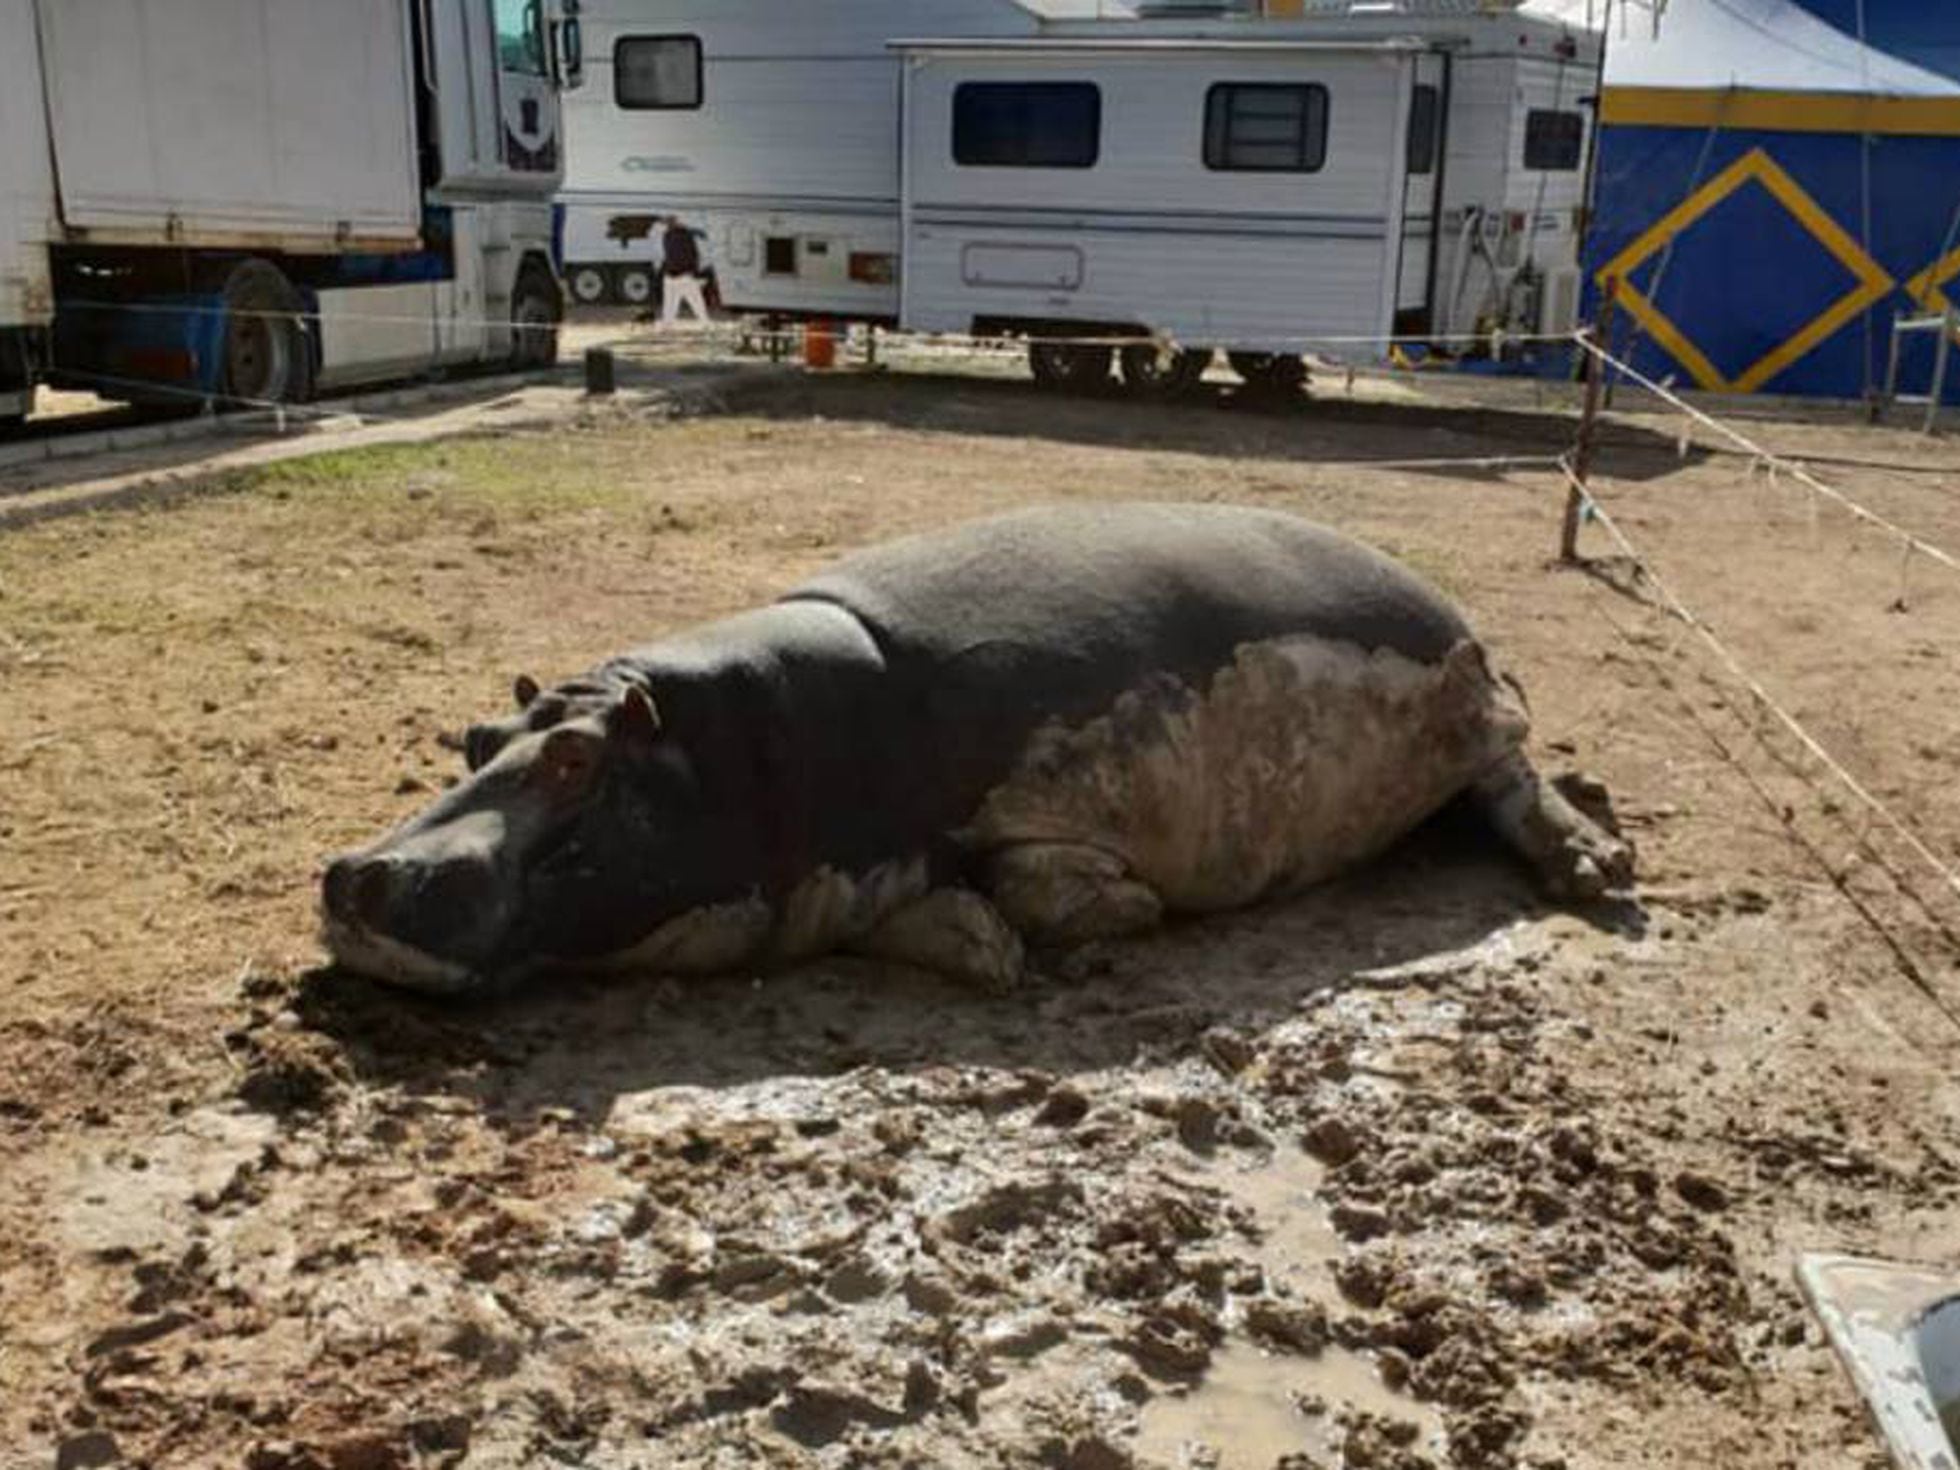 Animal abuse in Spain: Animal rights group decries “devastating” condition  of circus animals in Granada | Spain | EL PAÍS English Edition